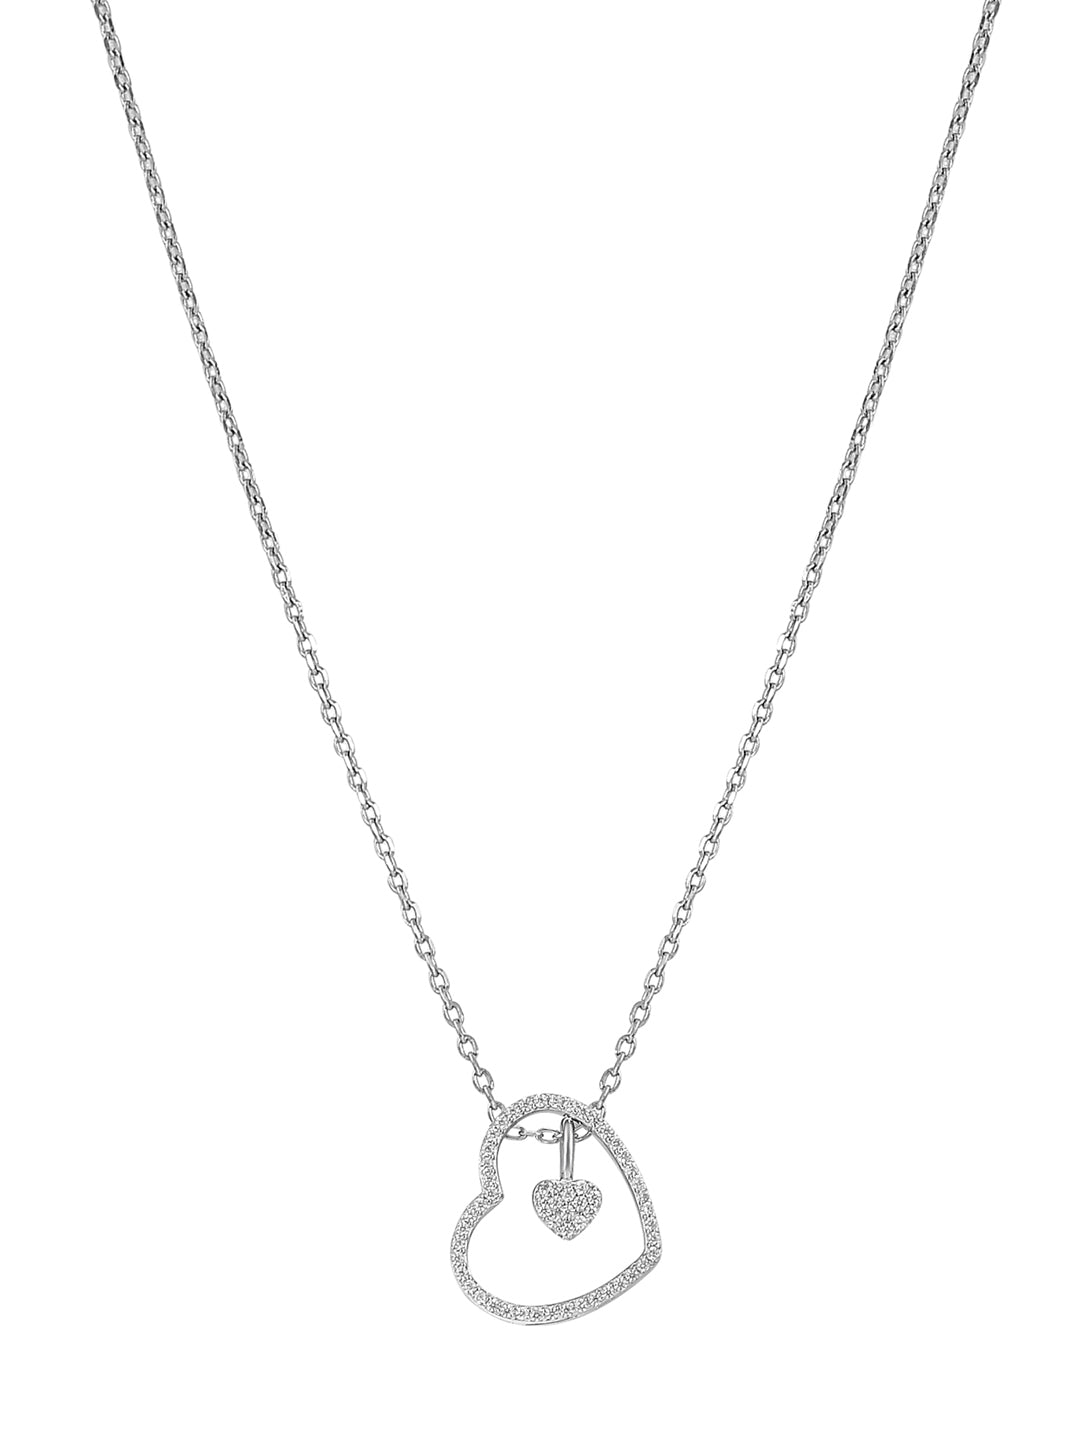 Swarovski Heart Necklace in Sterling Silver